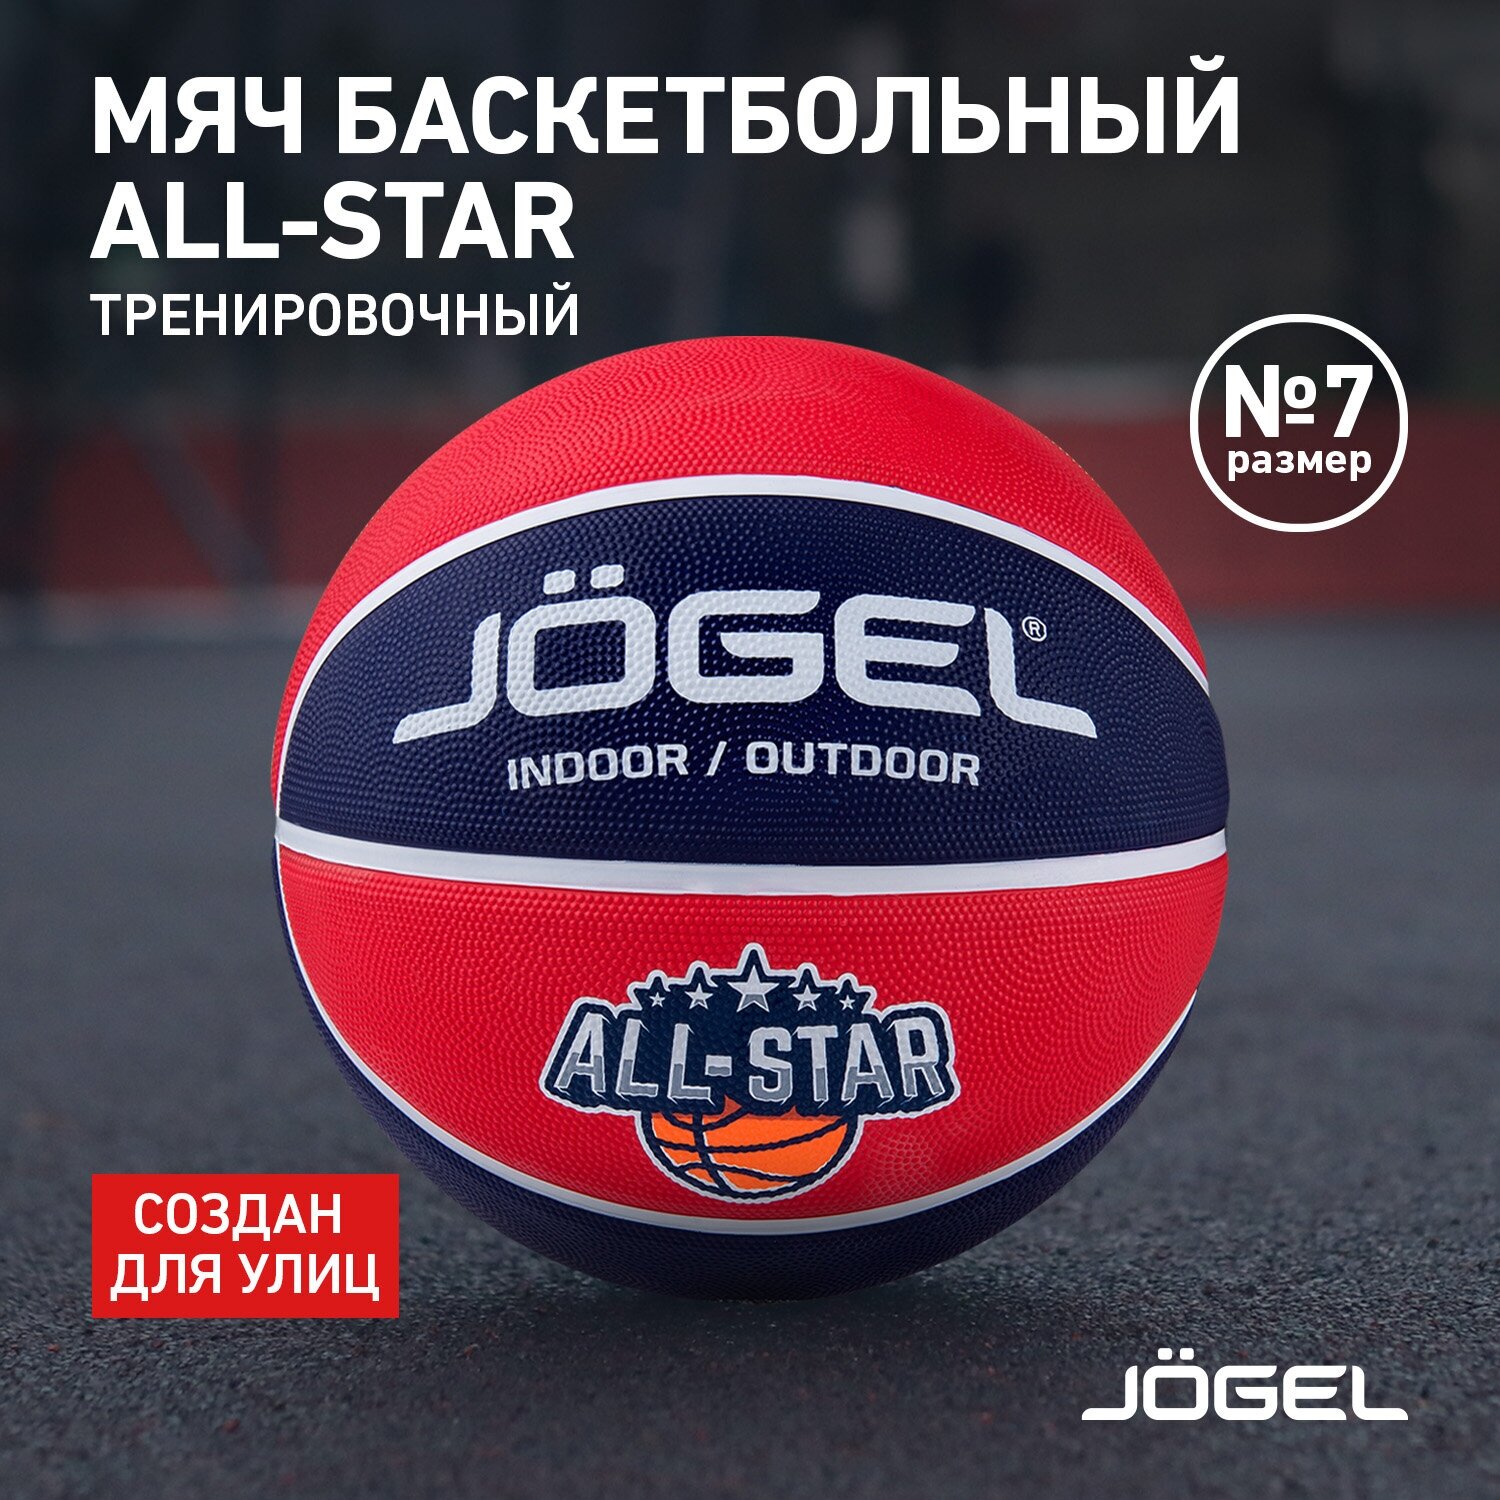 Баскетбольный мяч Jogel ALL-STAR для уличного баскетбола, размер 7